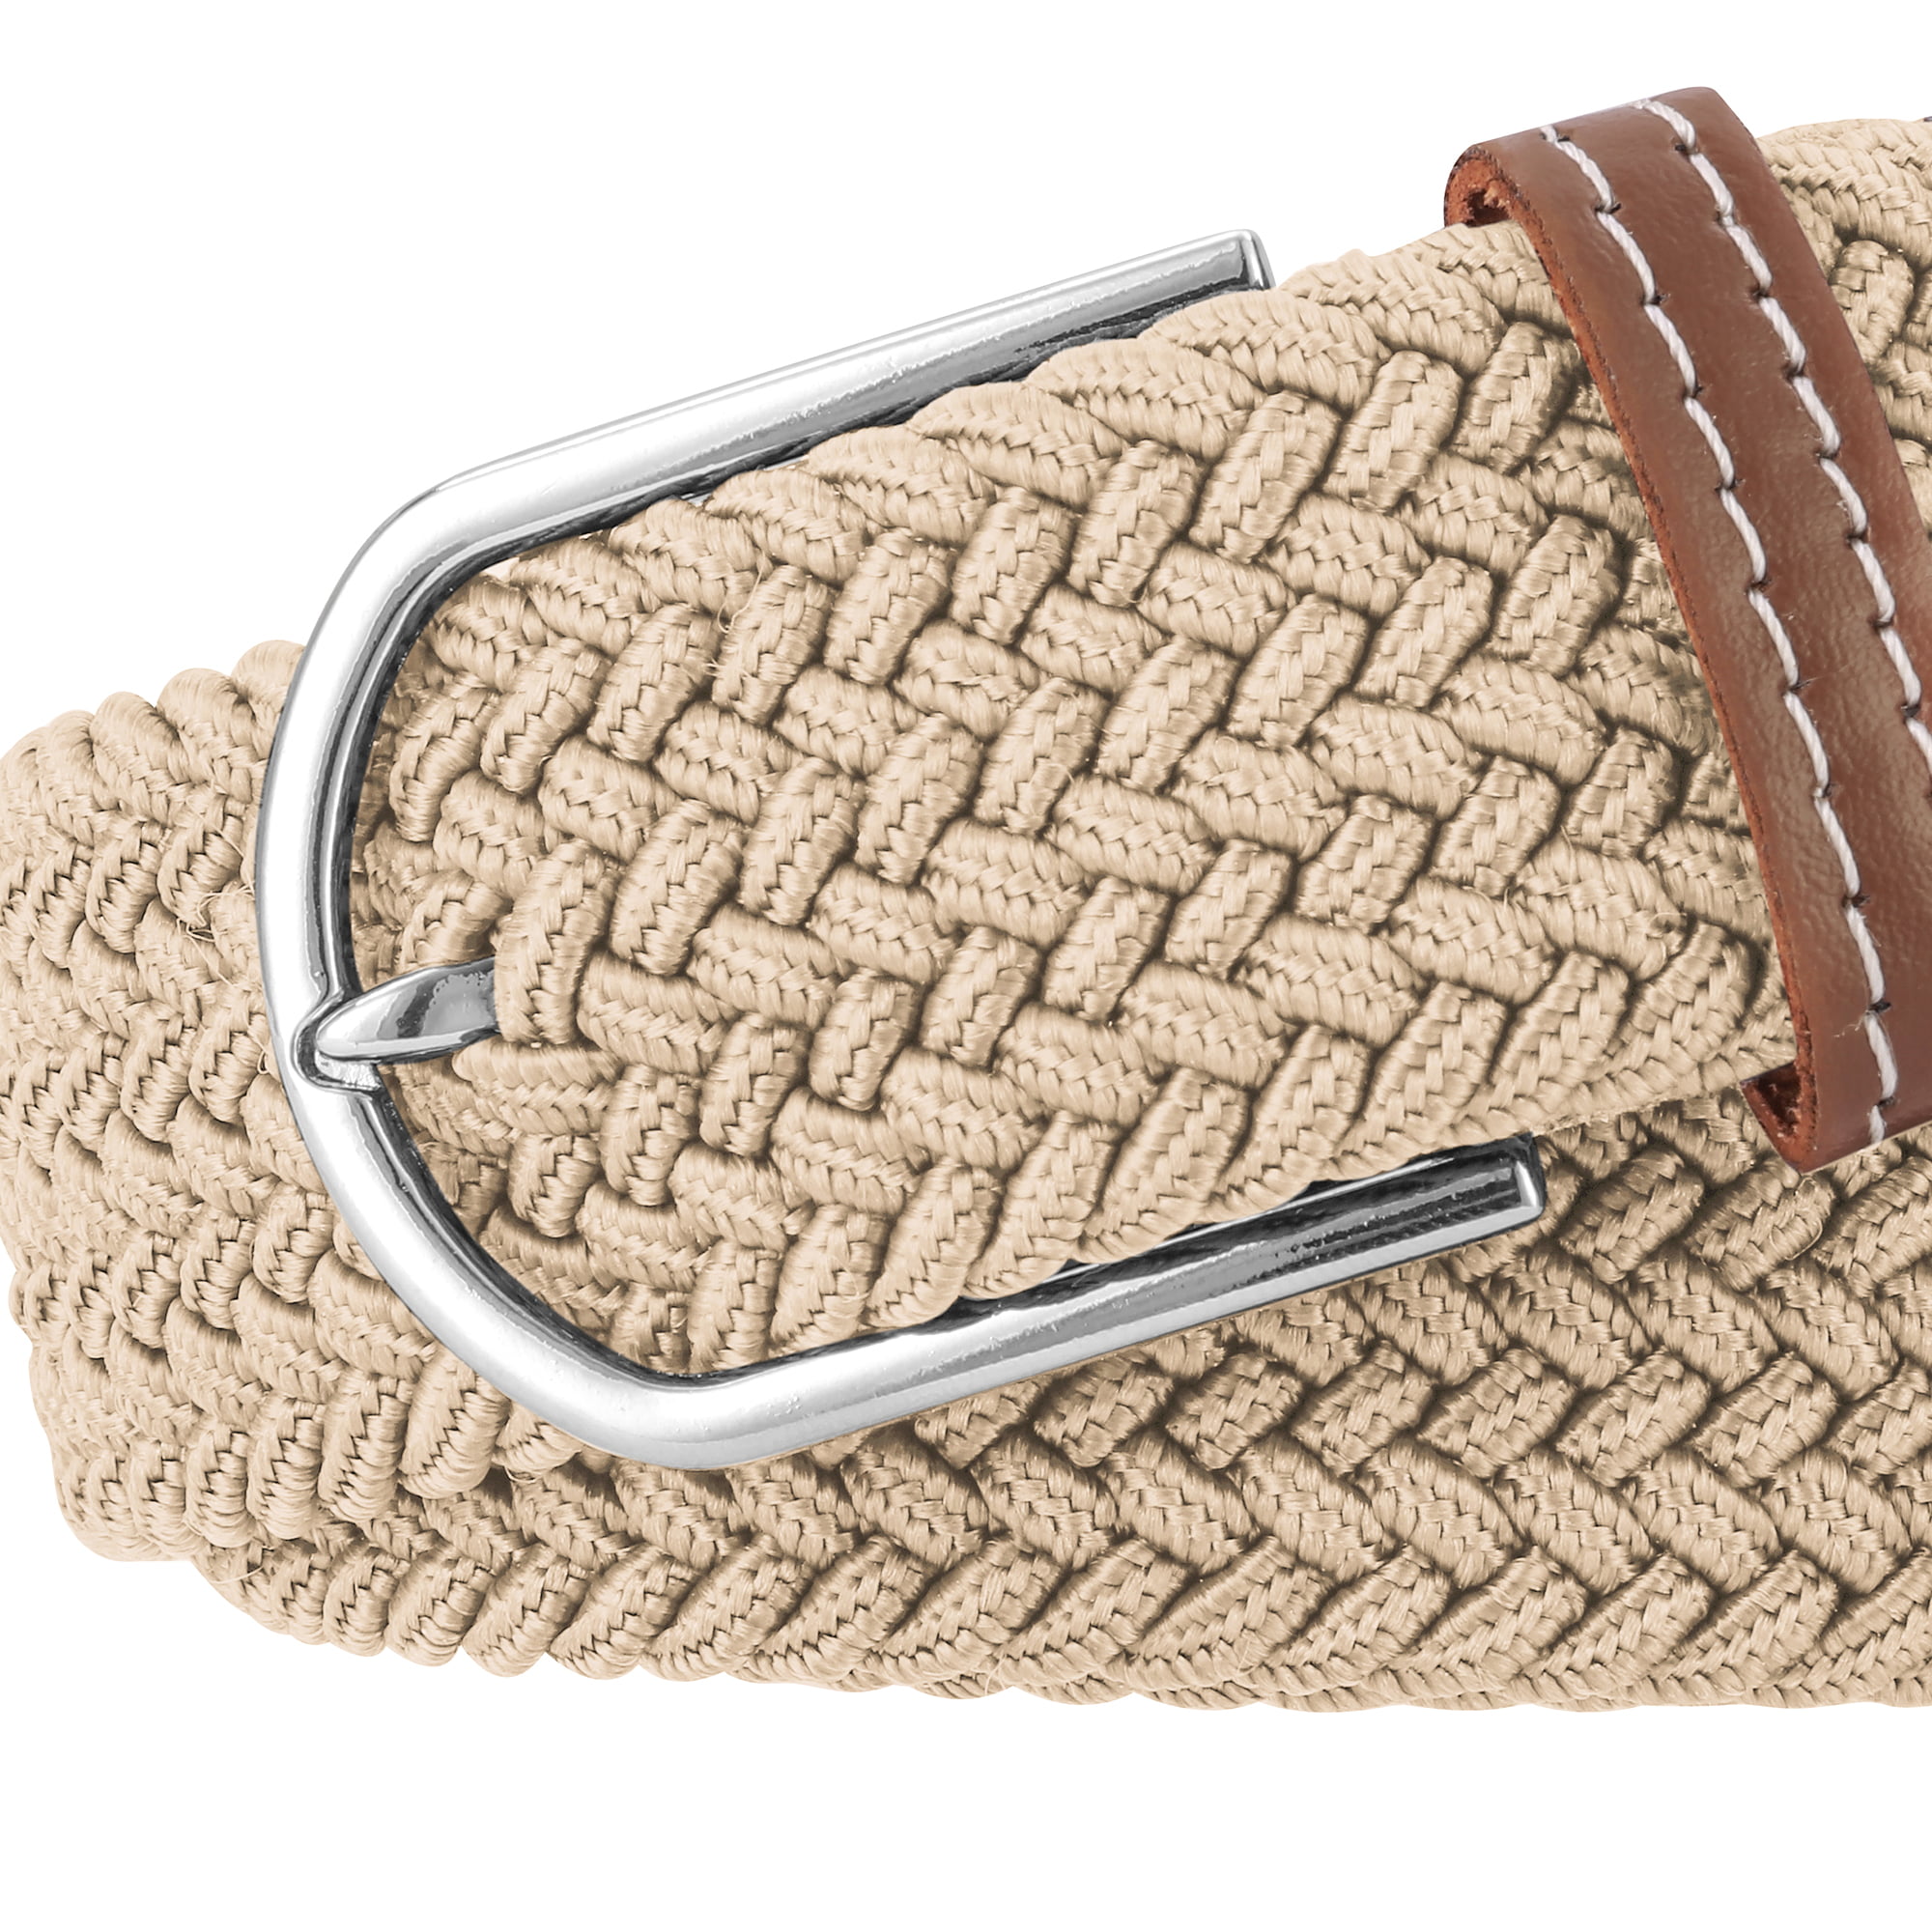 Men's Ratchet Belts 1 3/8 Nylon Web Strap Easy Trim to Fit – LionVII